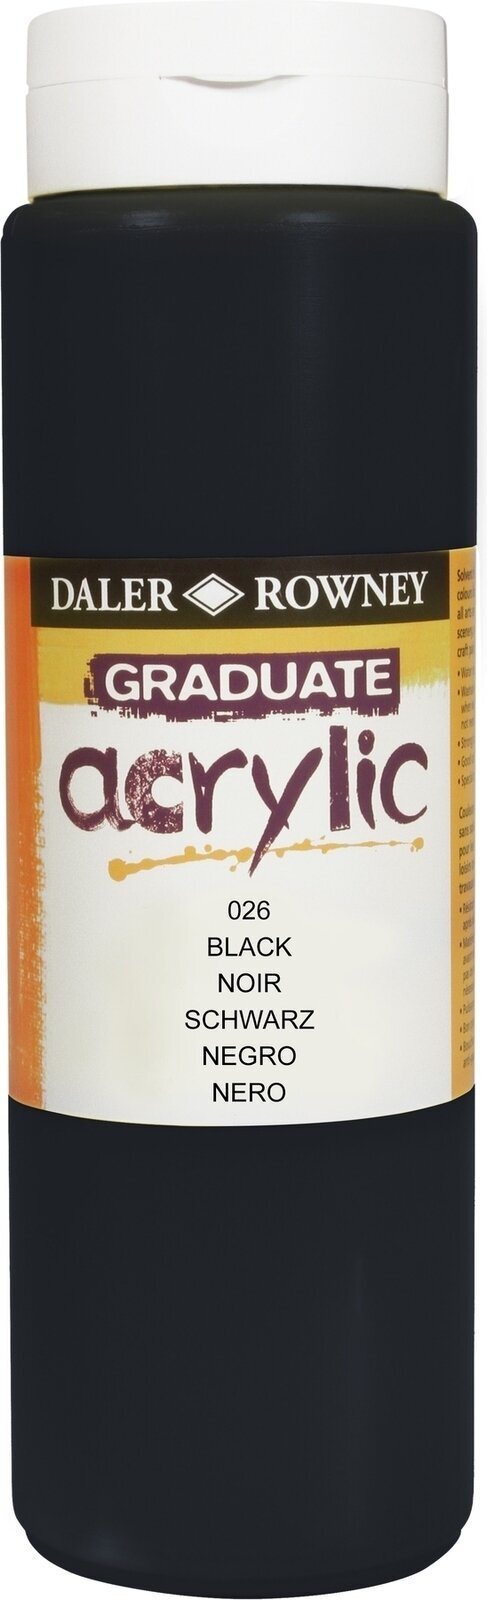 Acrylic Paint Daler Rowney Graduate Acrylic Paint Black 500 ml 1 pc